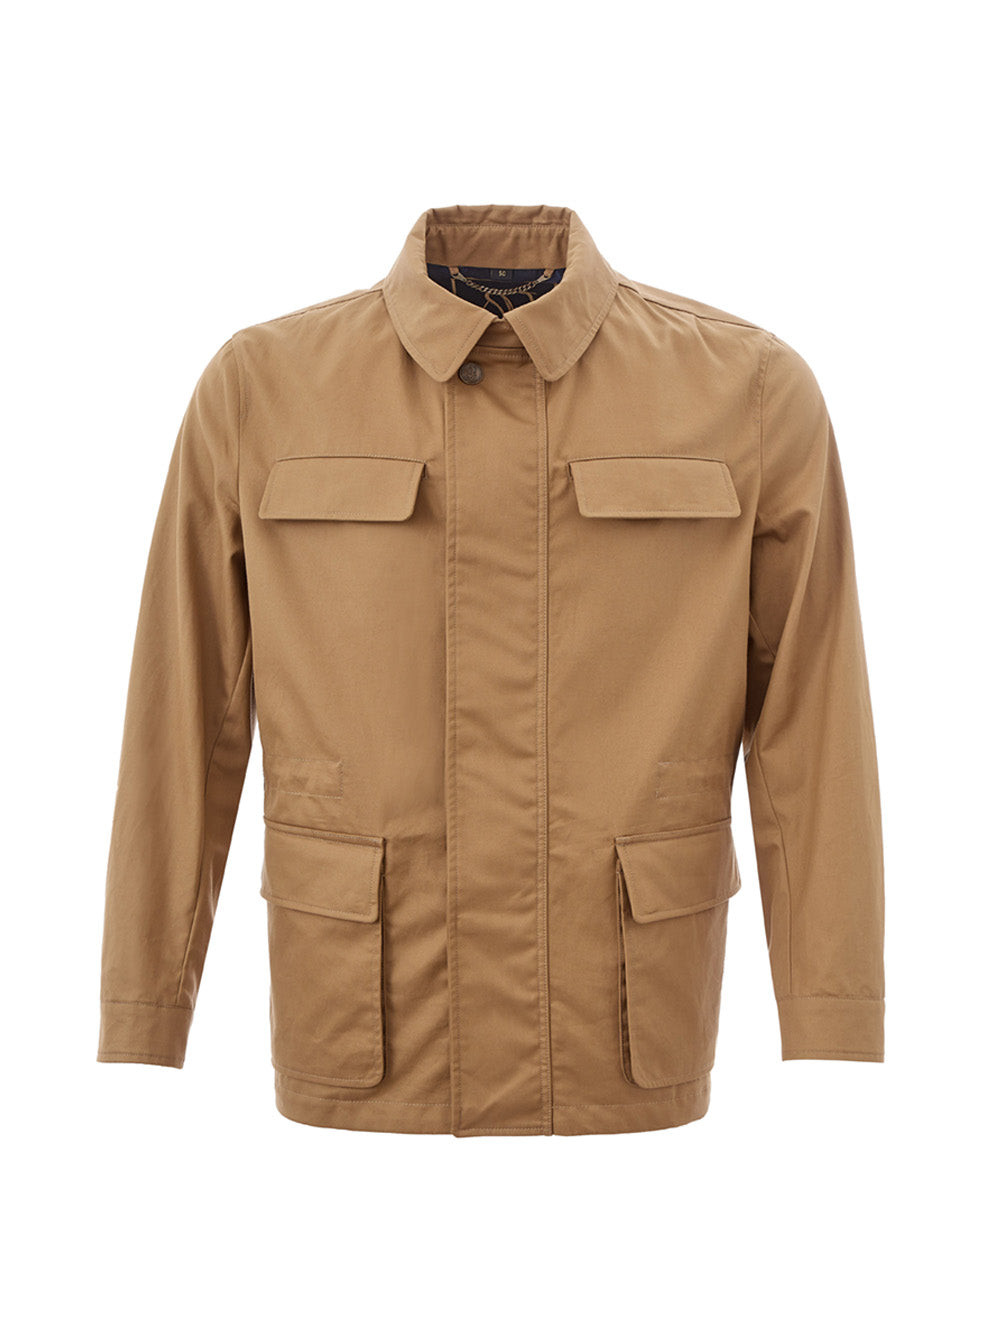 Saharan Beige Cotton Jacket